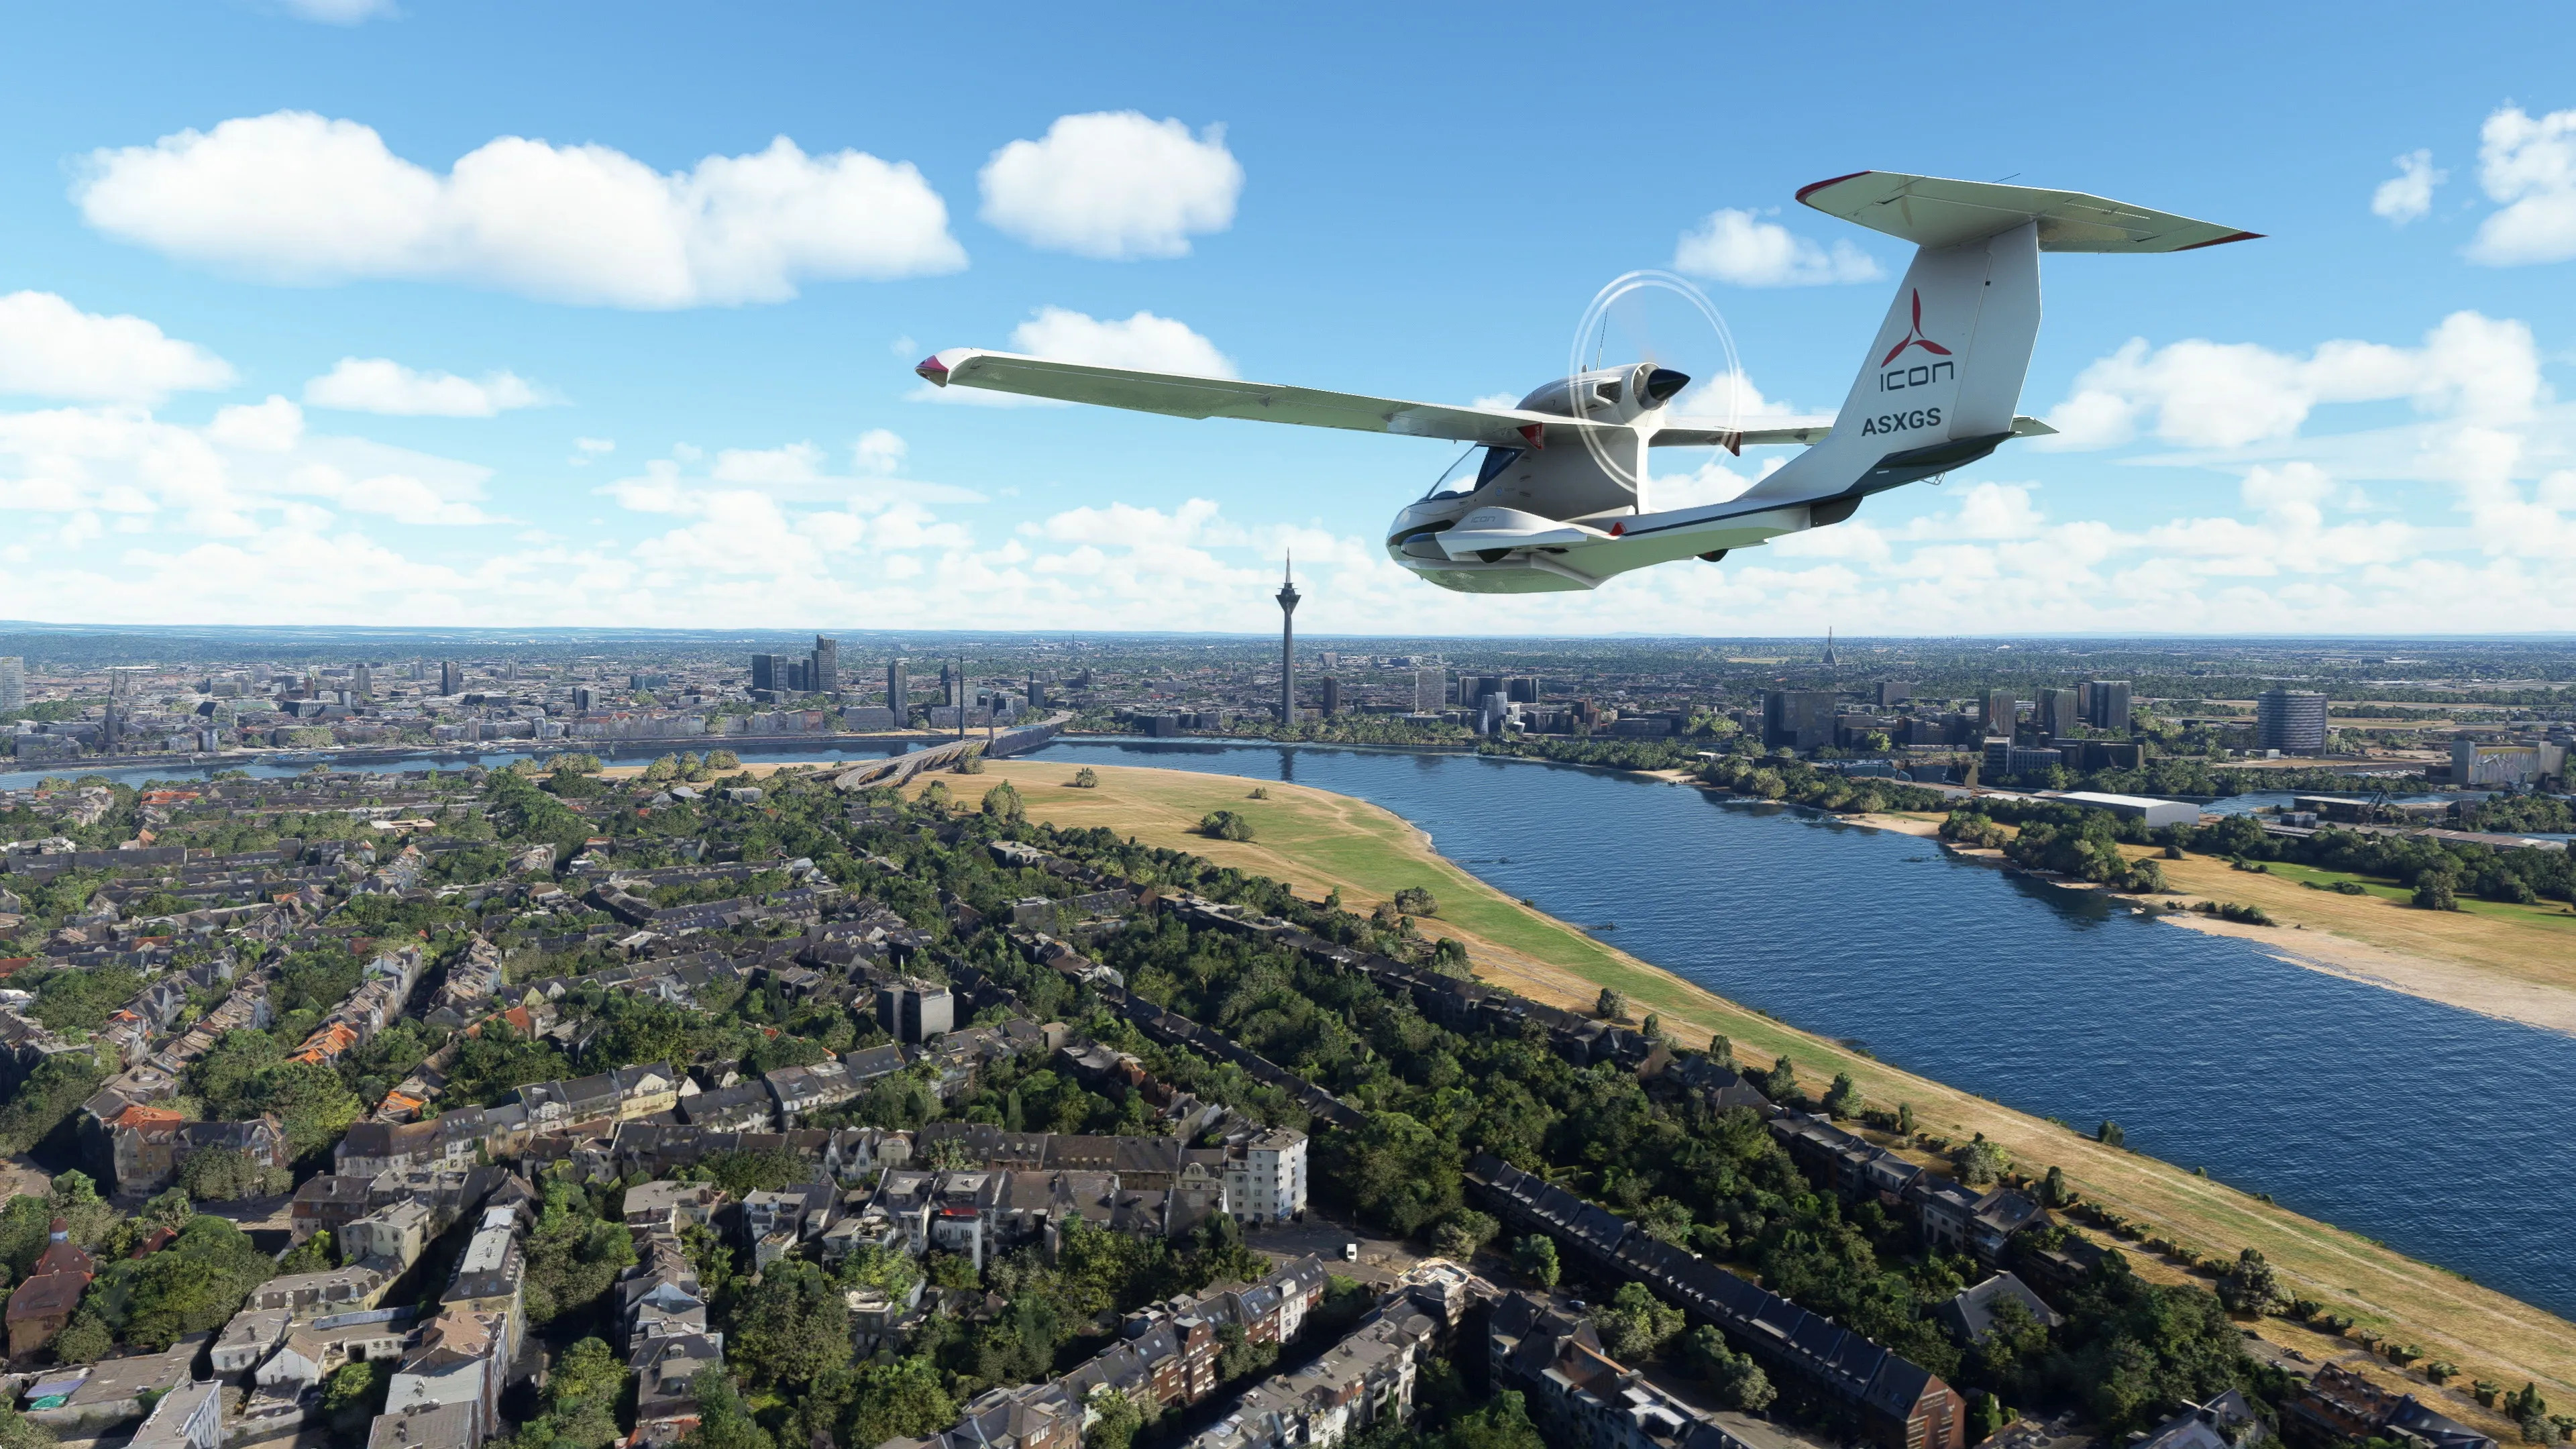 Microsoft Flight Simulator 40th Anniversary Steam Altergift